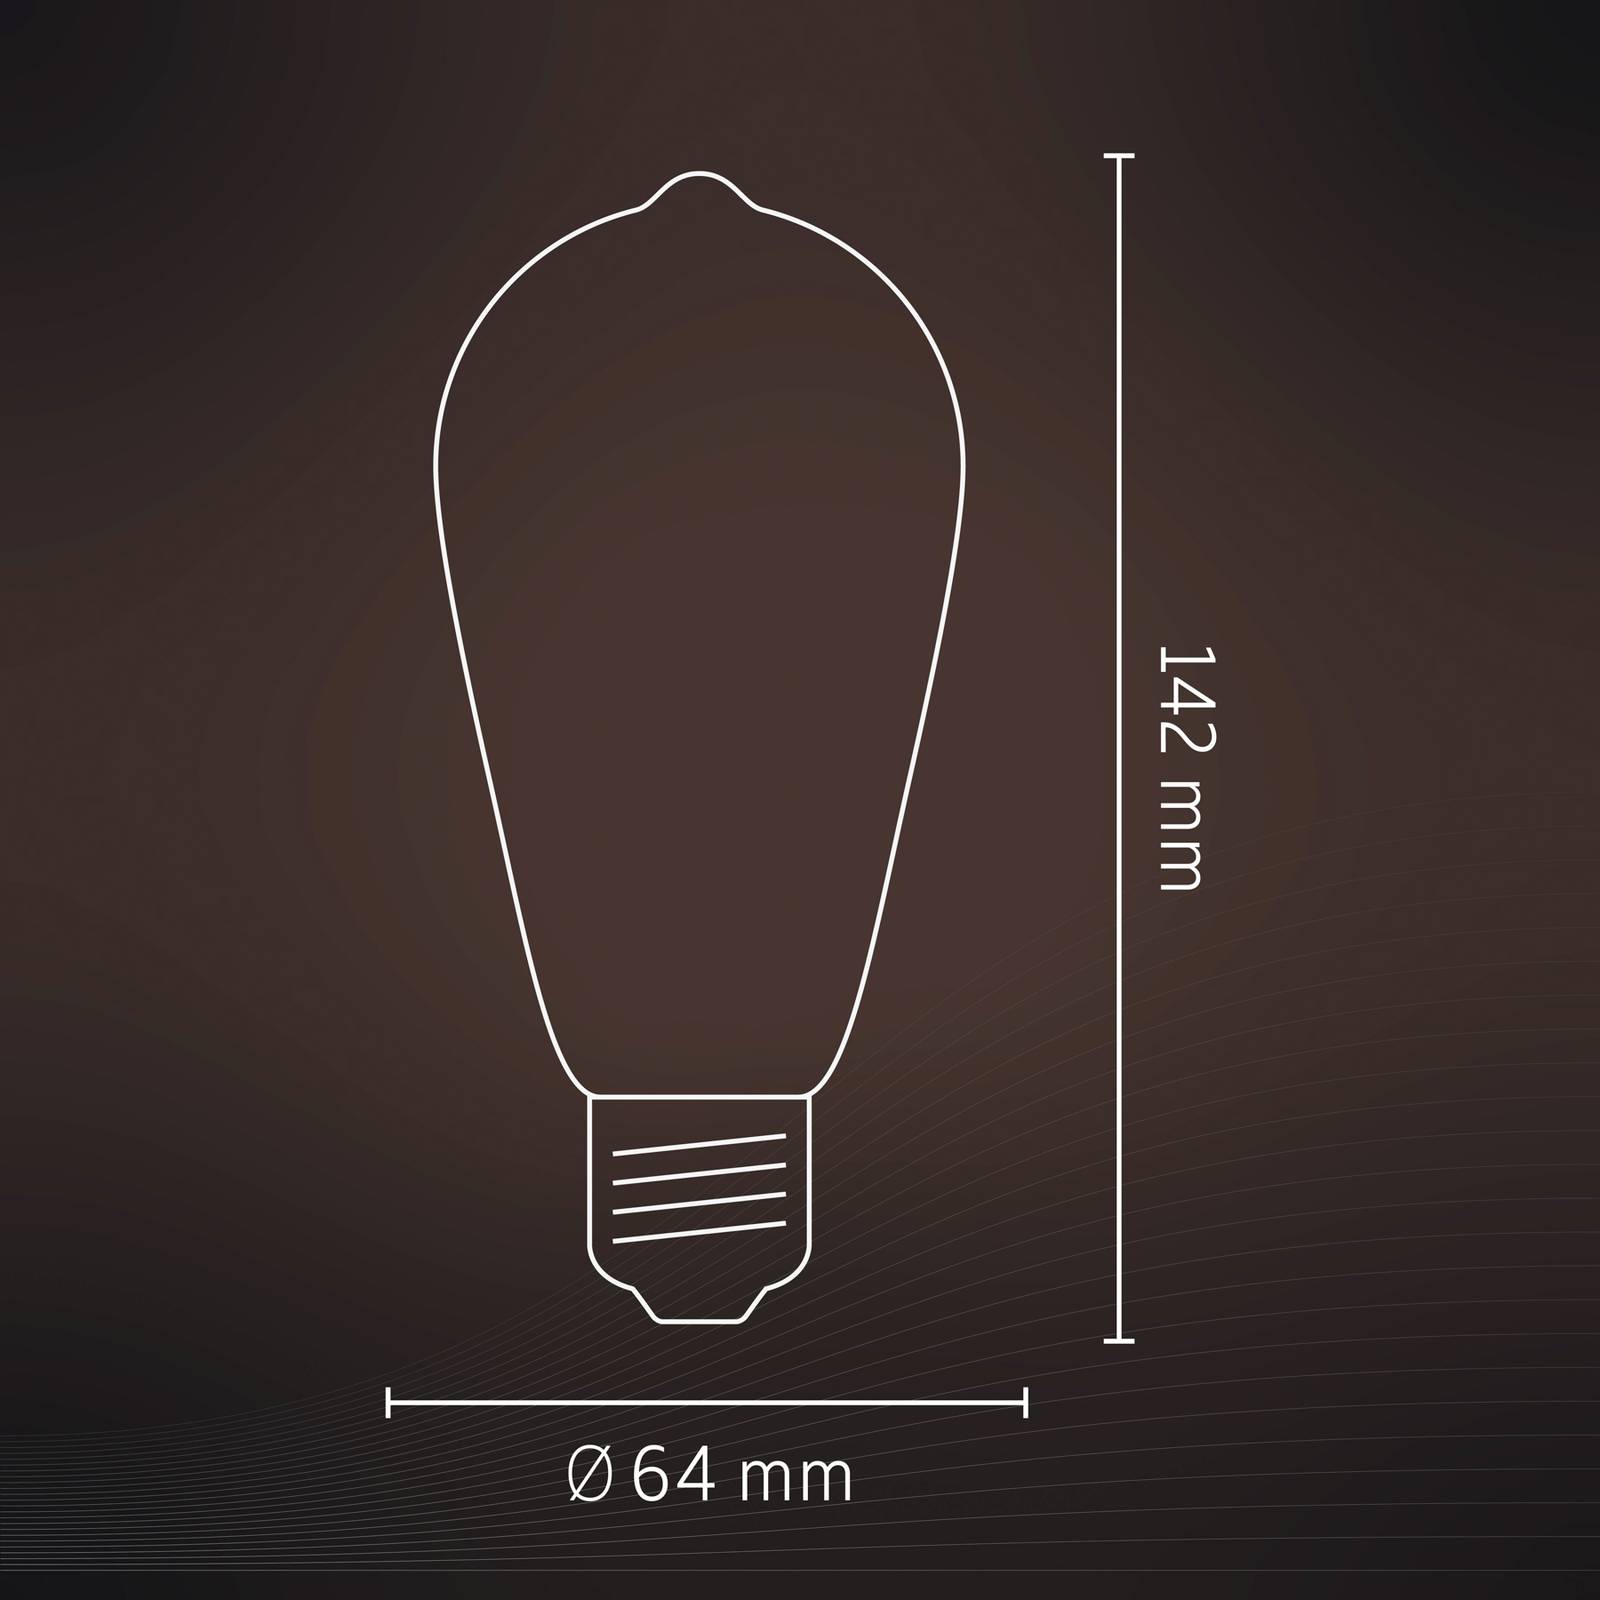 Calex E27 ST64 3,5W LED filament zlatá 821 stmieva